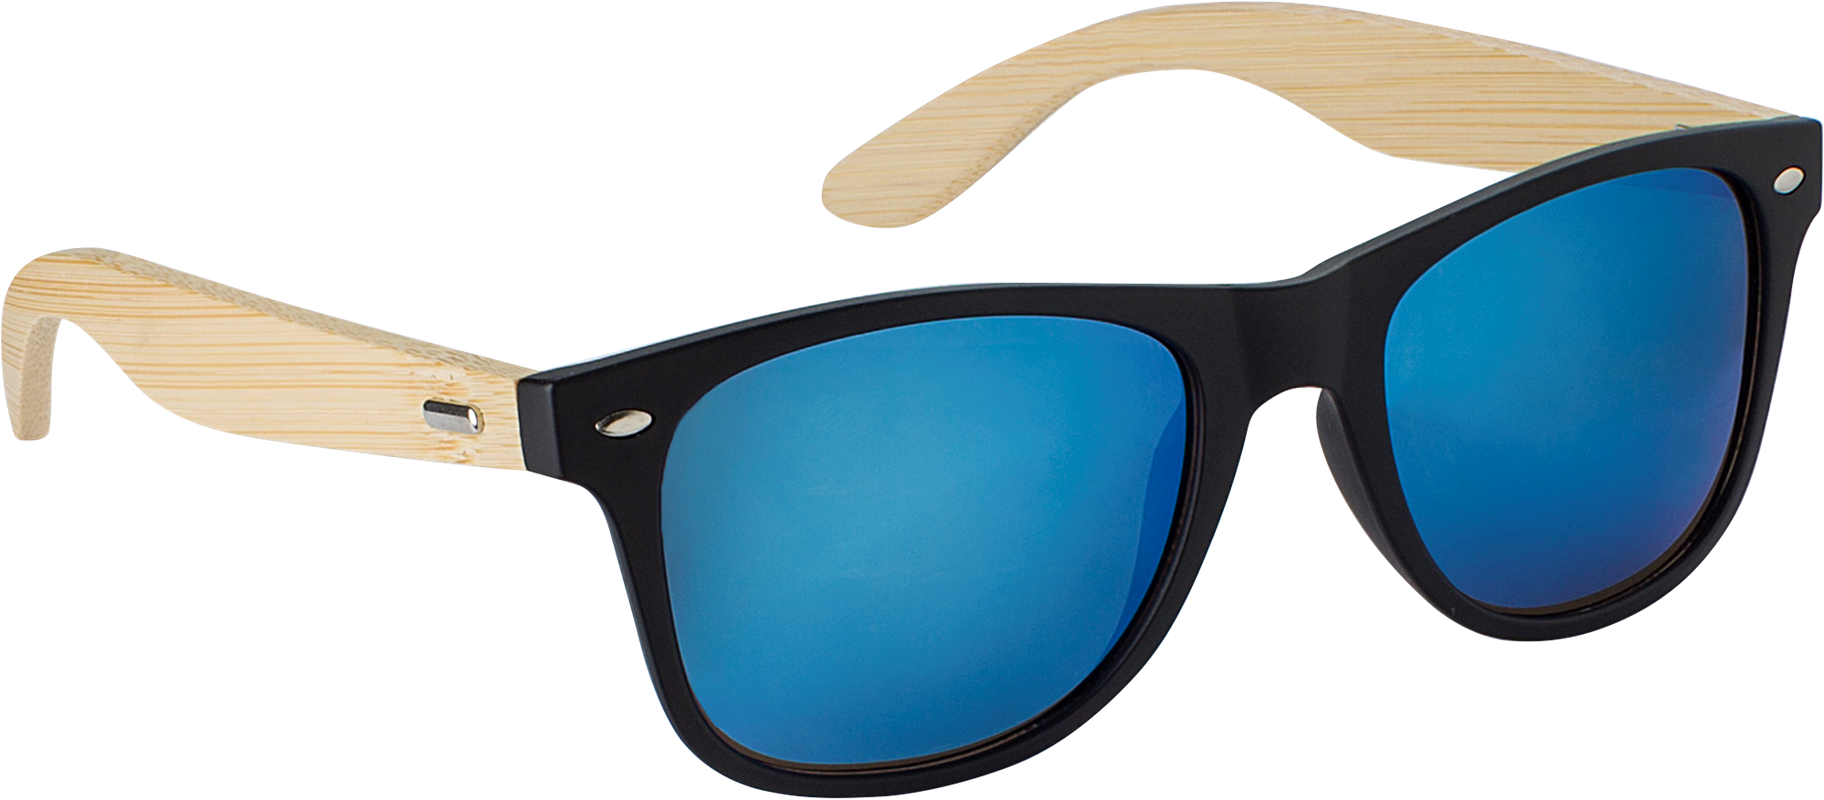 Bamboo sunglasses 967748_005 (Blue)